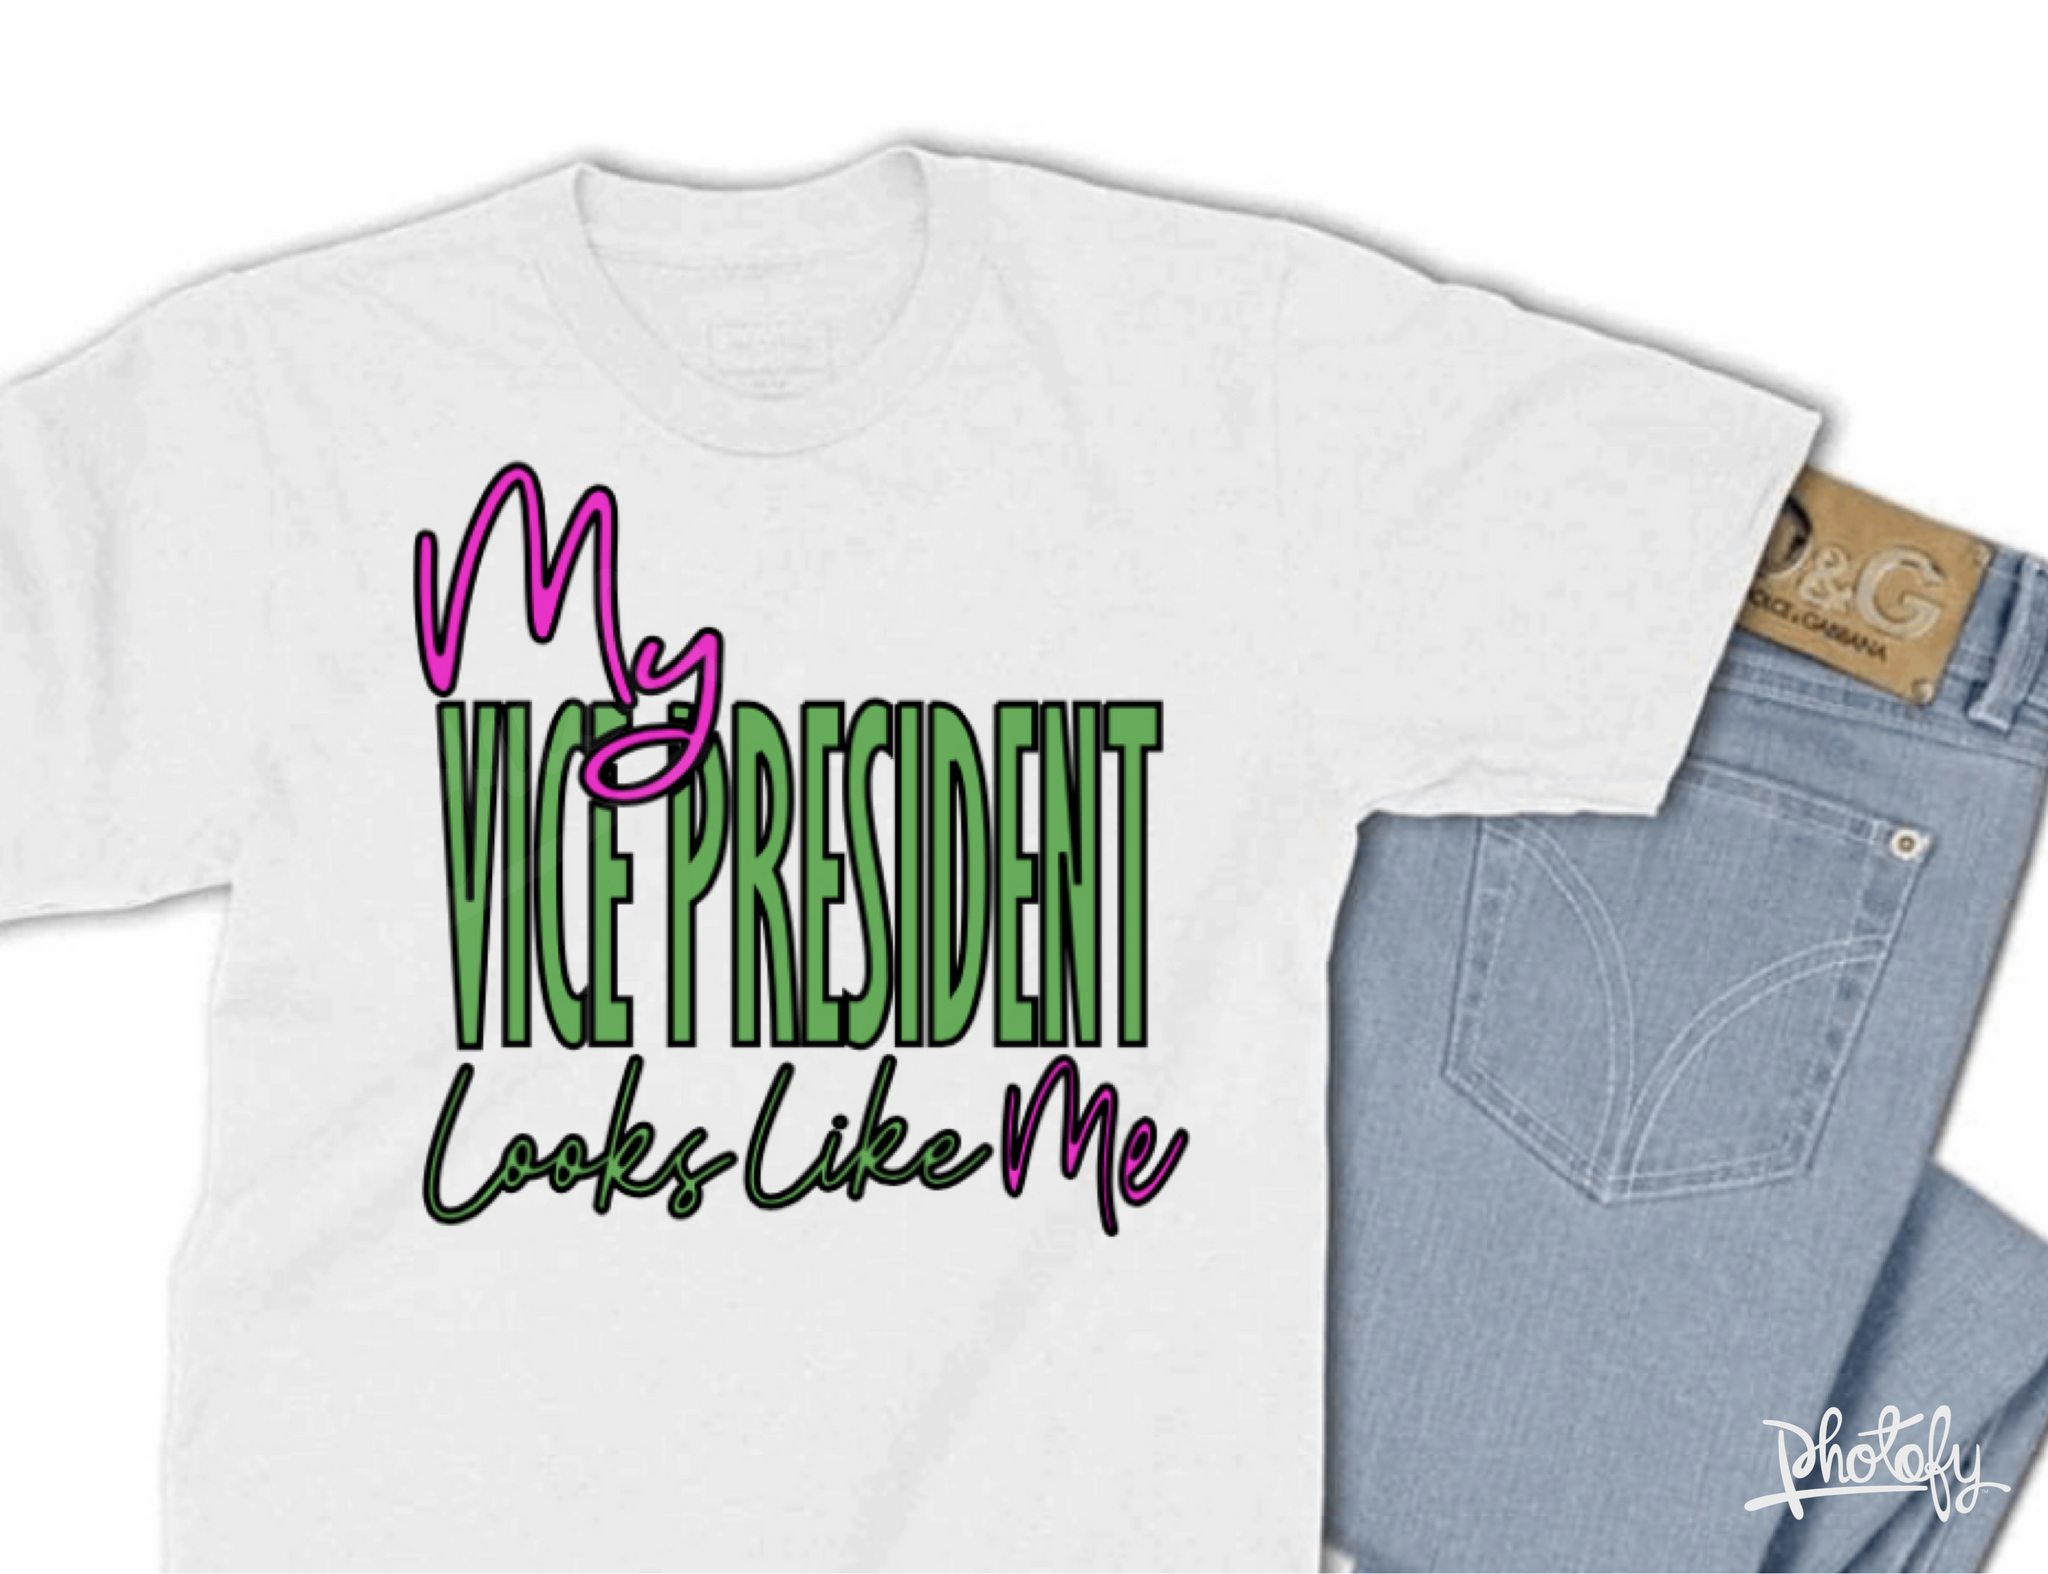 My Vice President Looks Like Me T Shirt